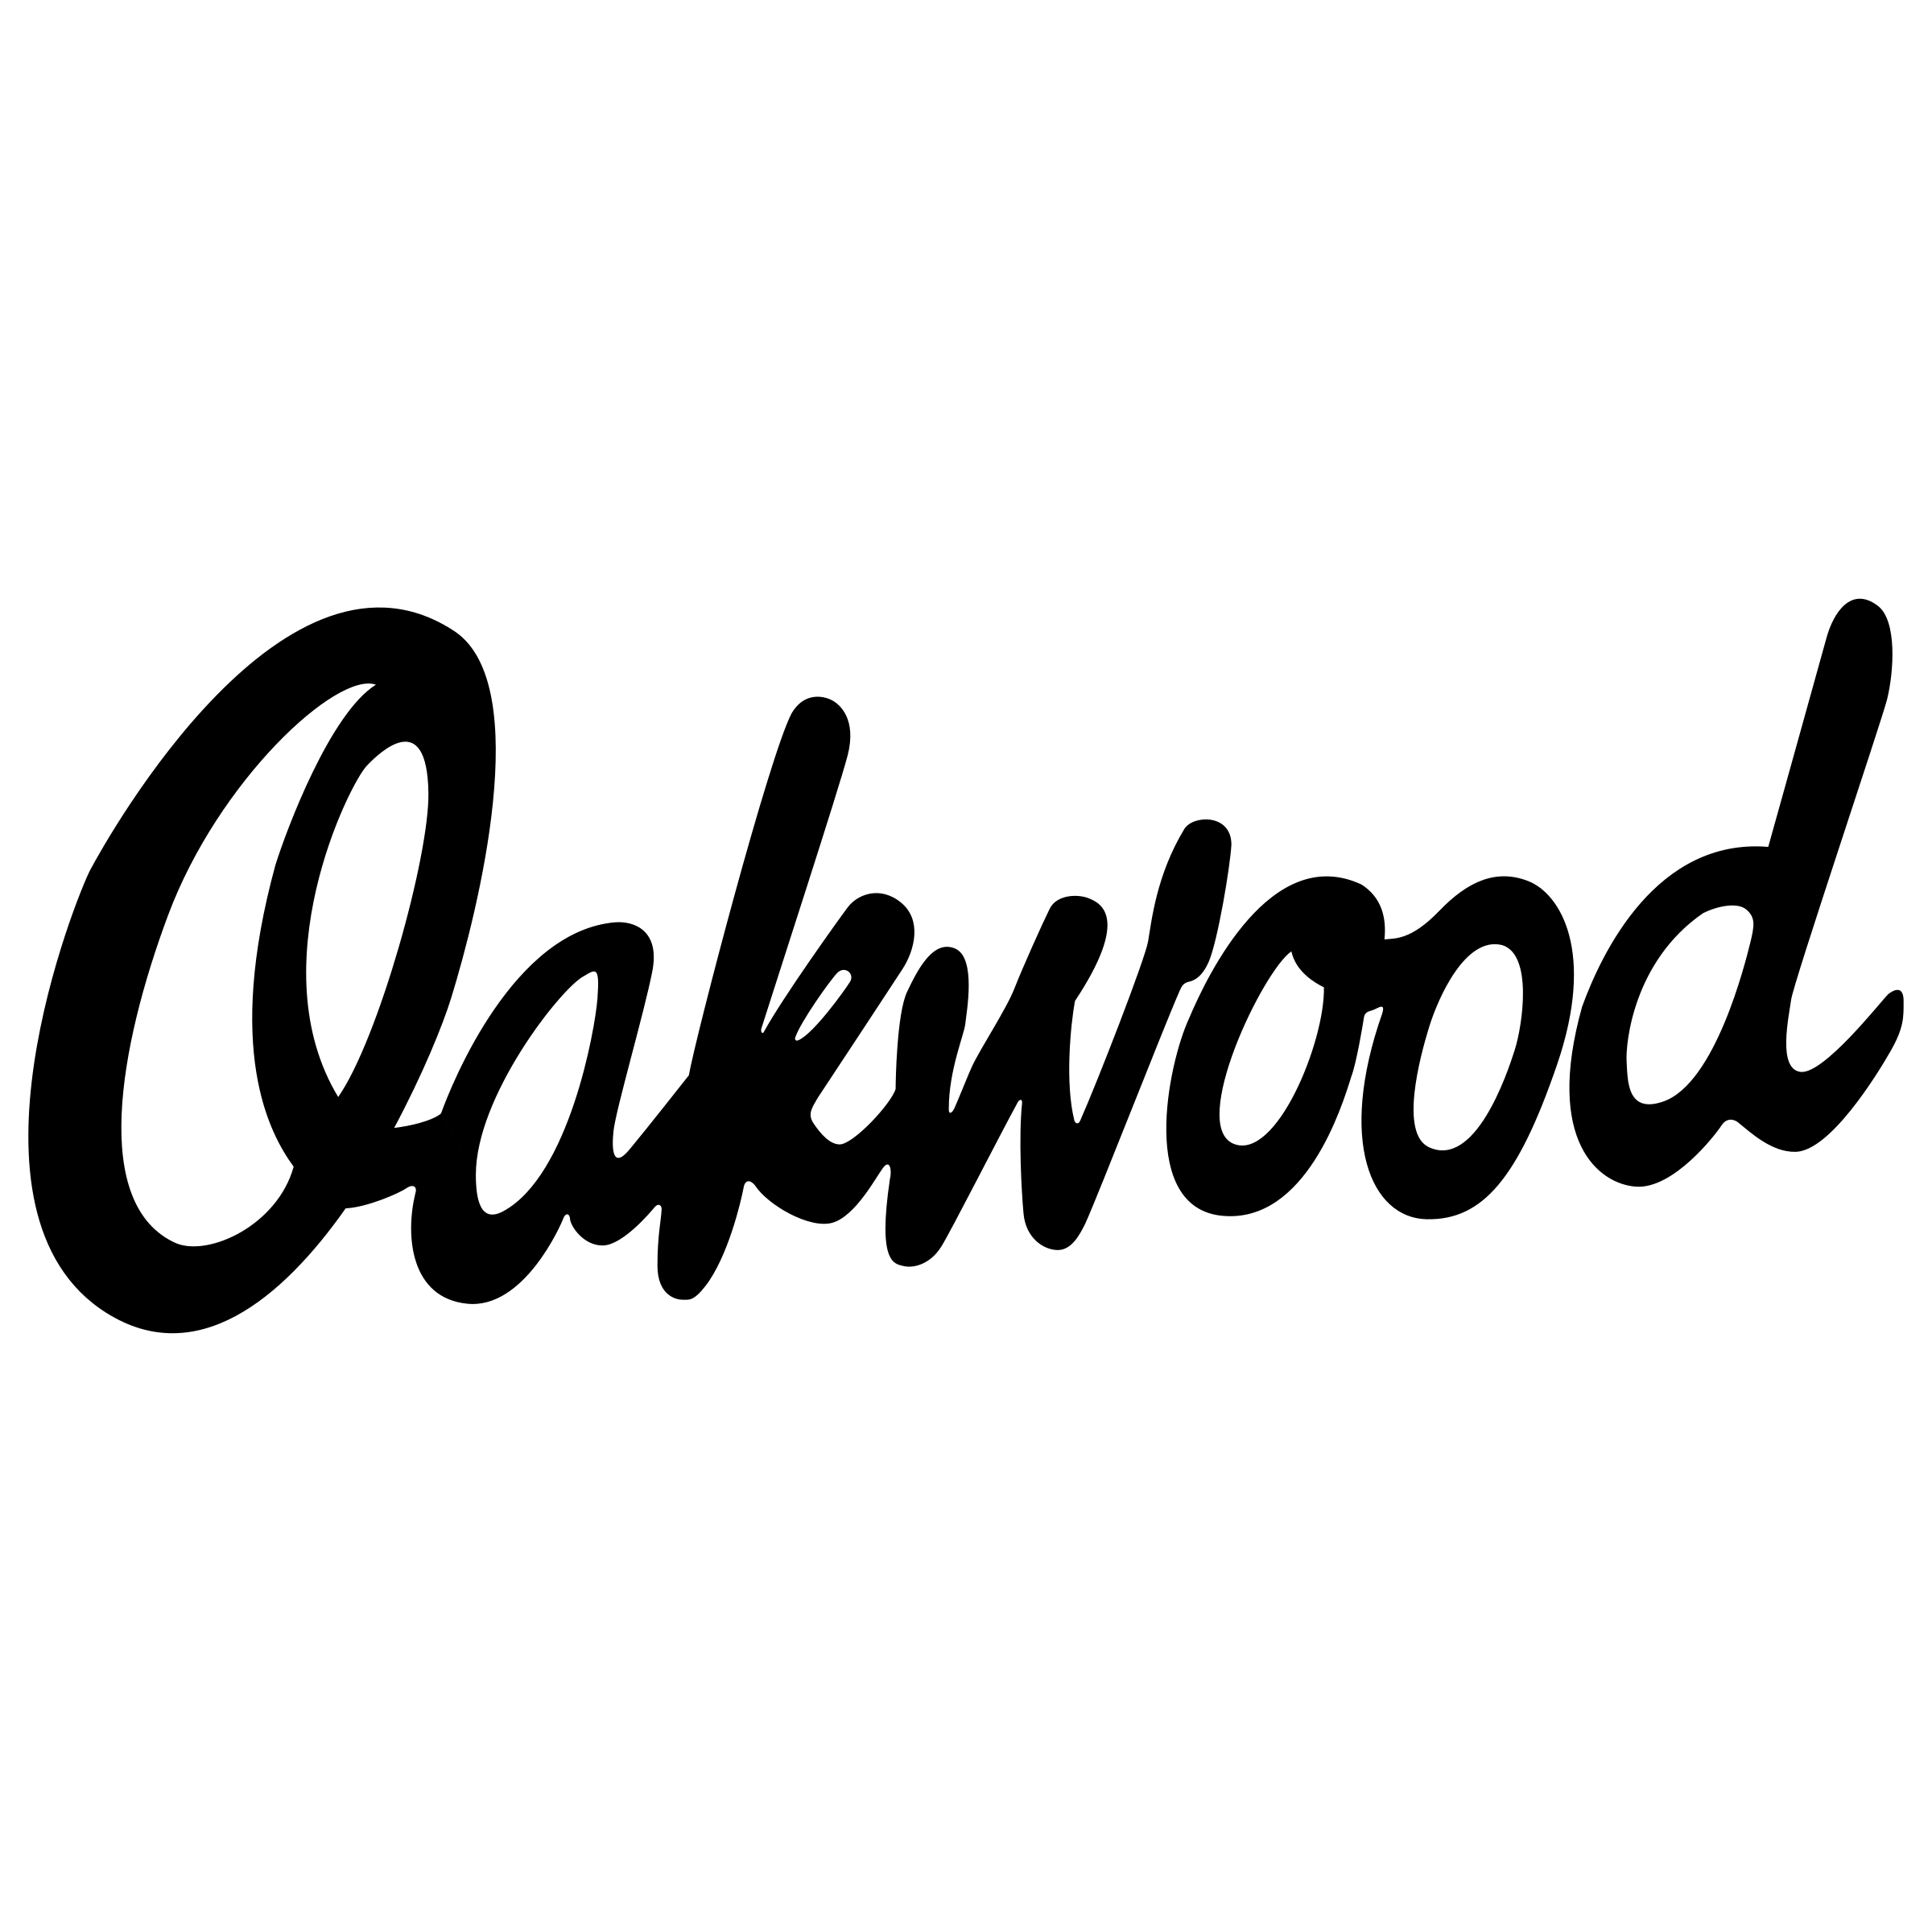 Oakwood Logo - Oakwood Logo PNG Transparent & SVG Vector - Freebie Supply